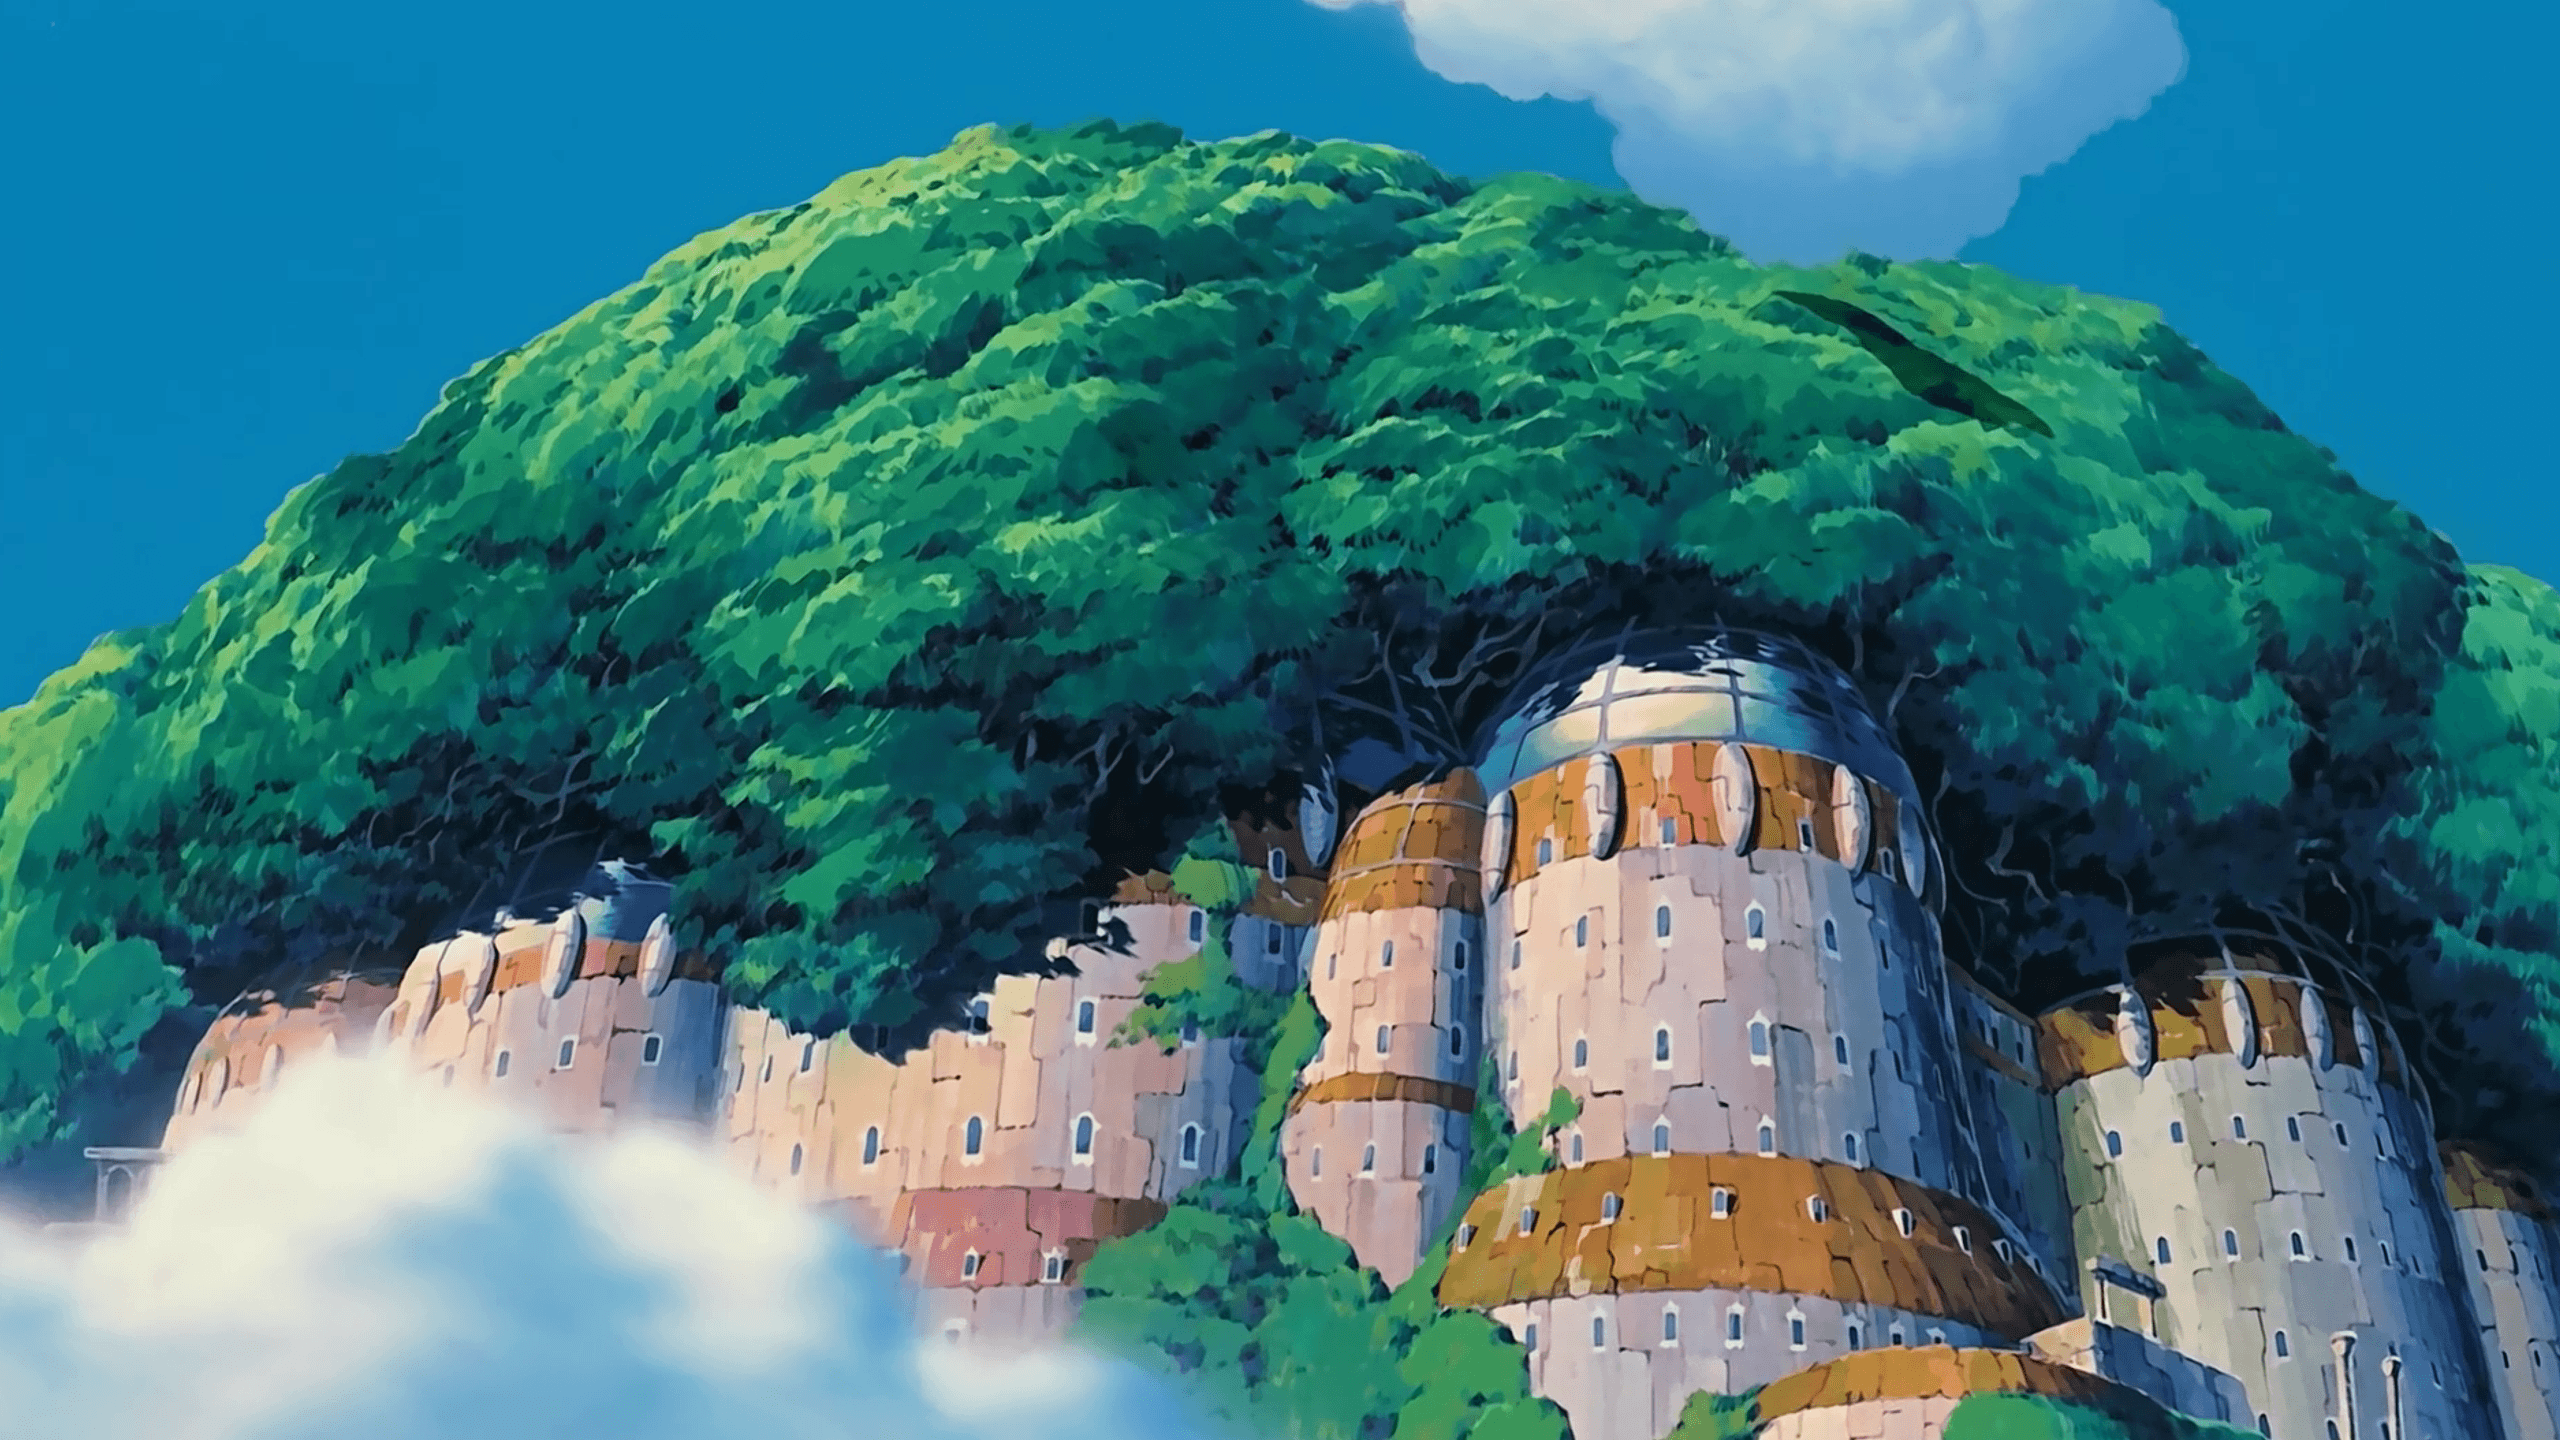 Studio Ghibli Laptop Wallpapers.